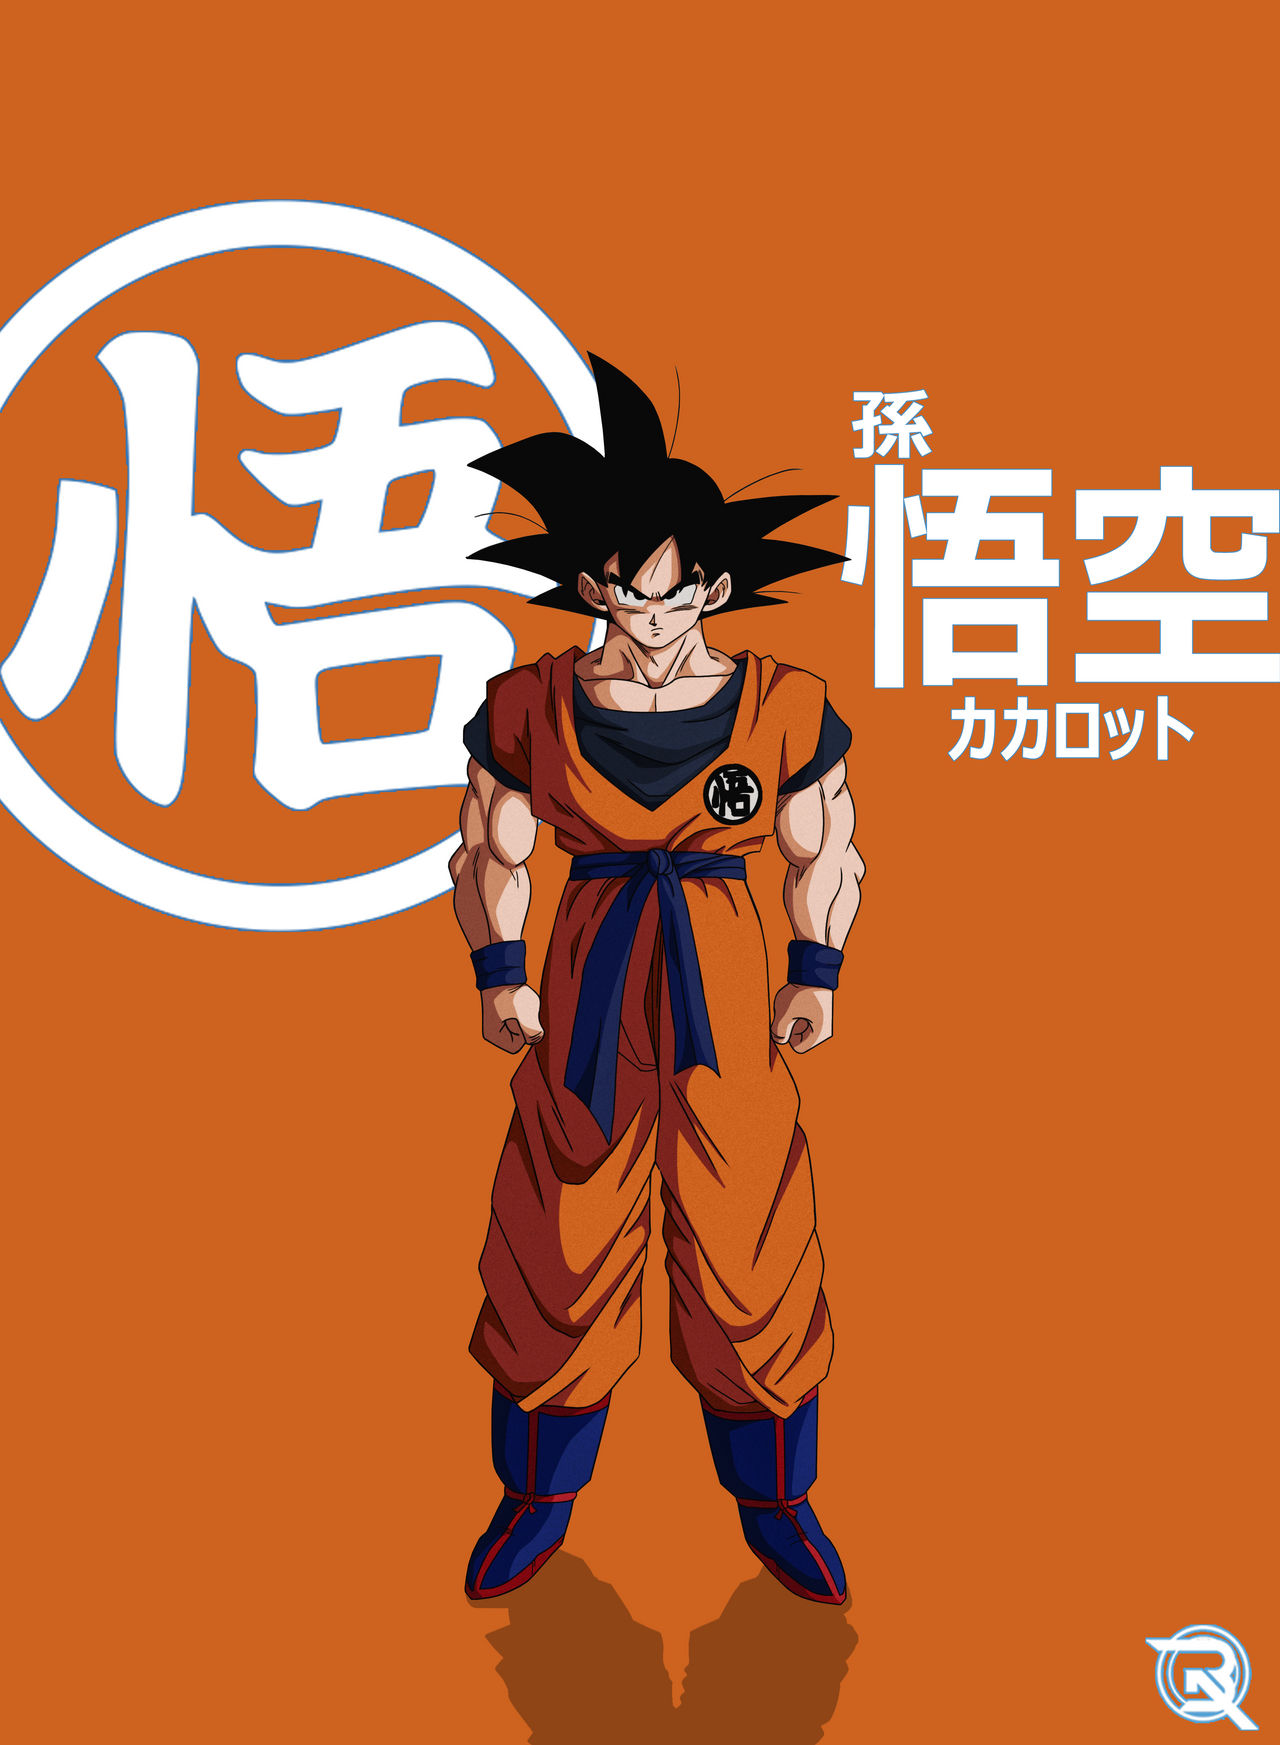 Goku - Kakaroto by TheJokermonge on DeviantArt